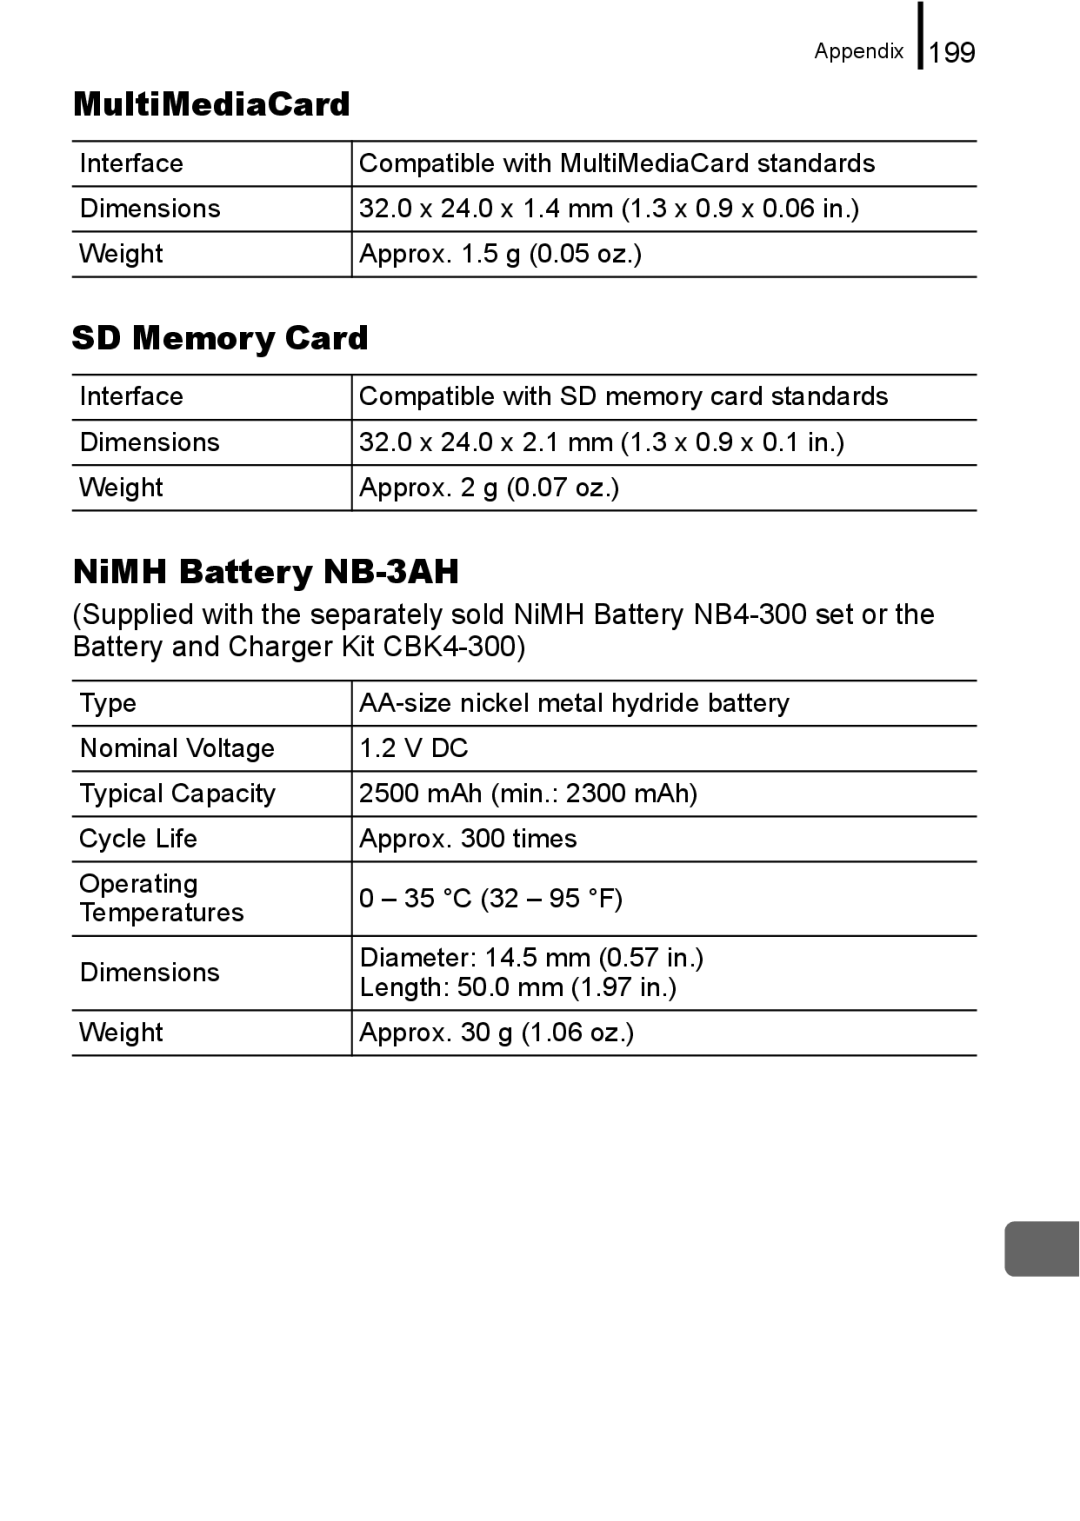 Canon A650 IS appendix MultiMediaCard, SD Memory Card, NiMH Battery NB-3AH, 199 